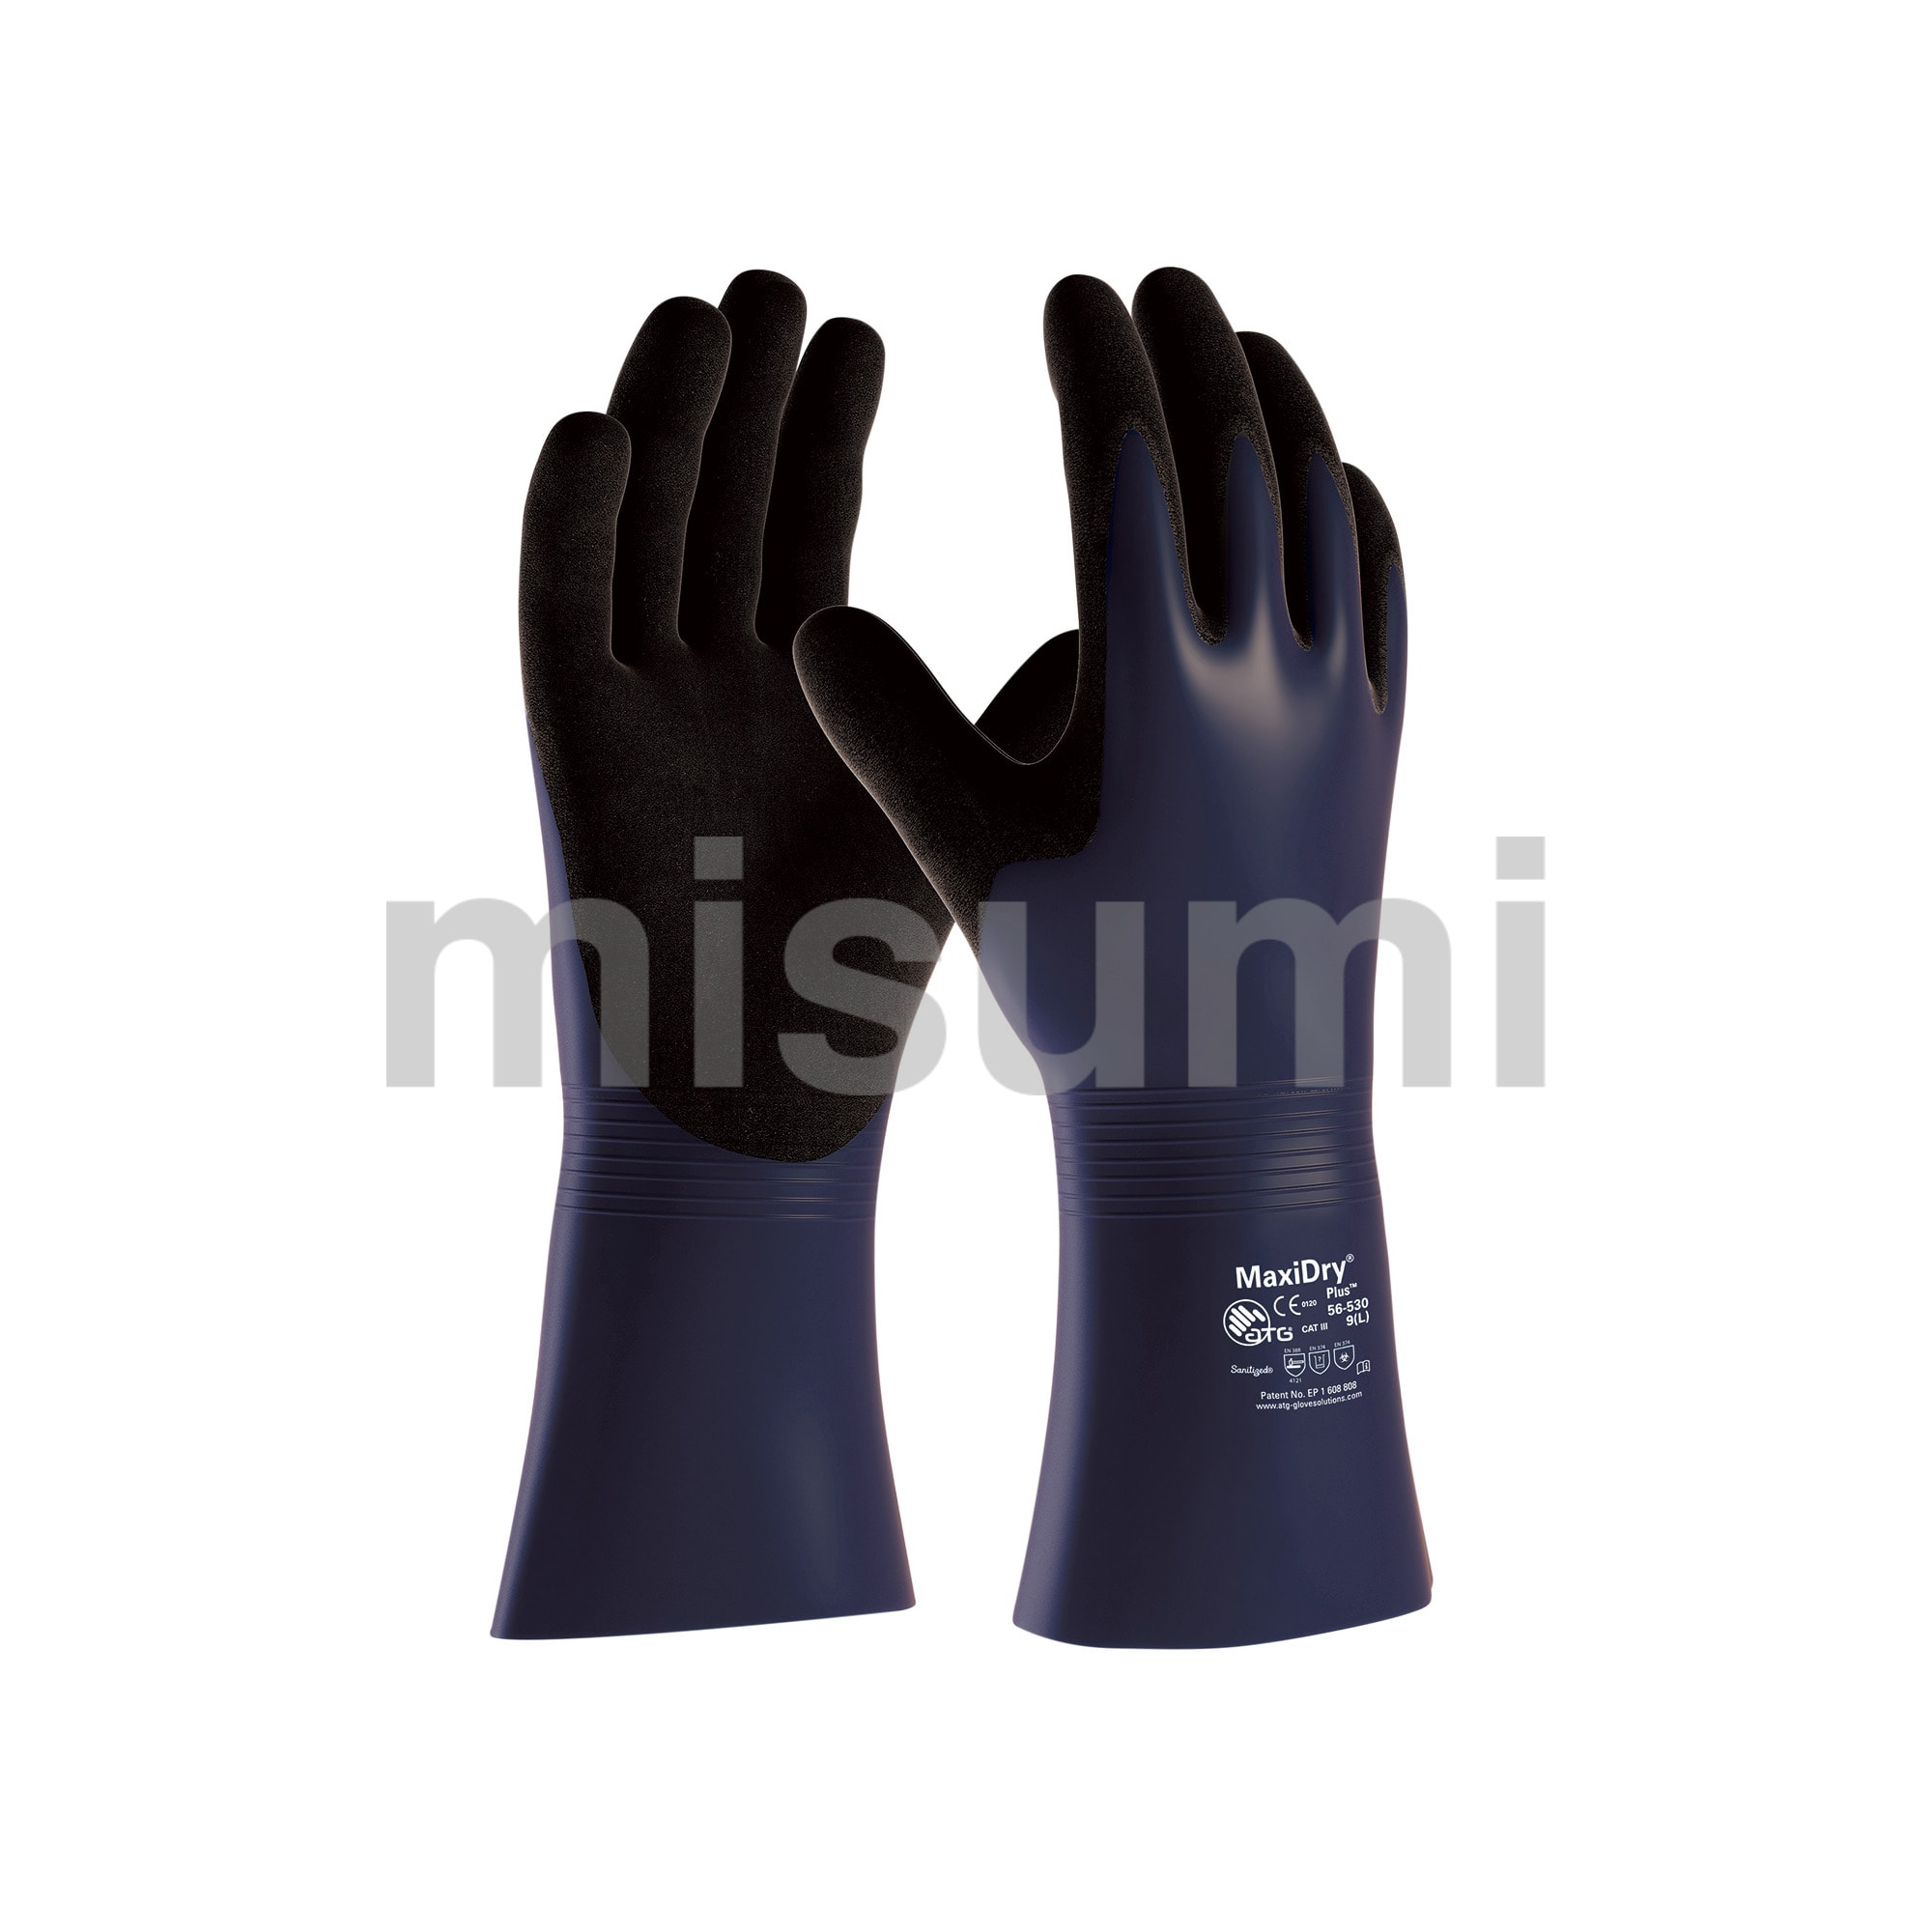 ATG 耐油ロング作業手袋 MaxiDry Plus 56-530 ミドリ安全 MISUMI(ミスミ)